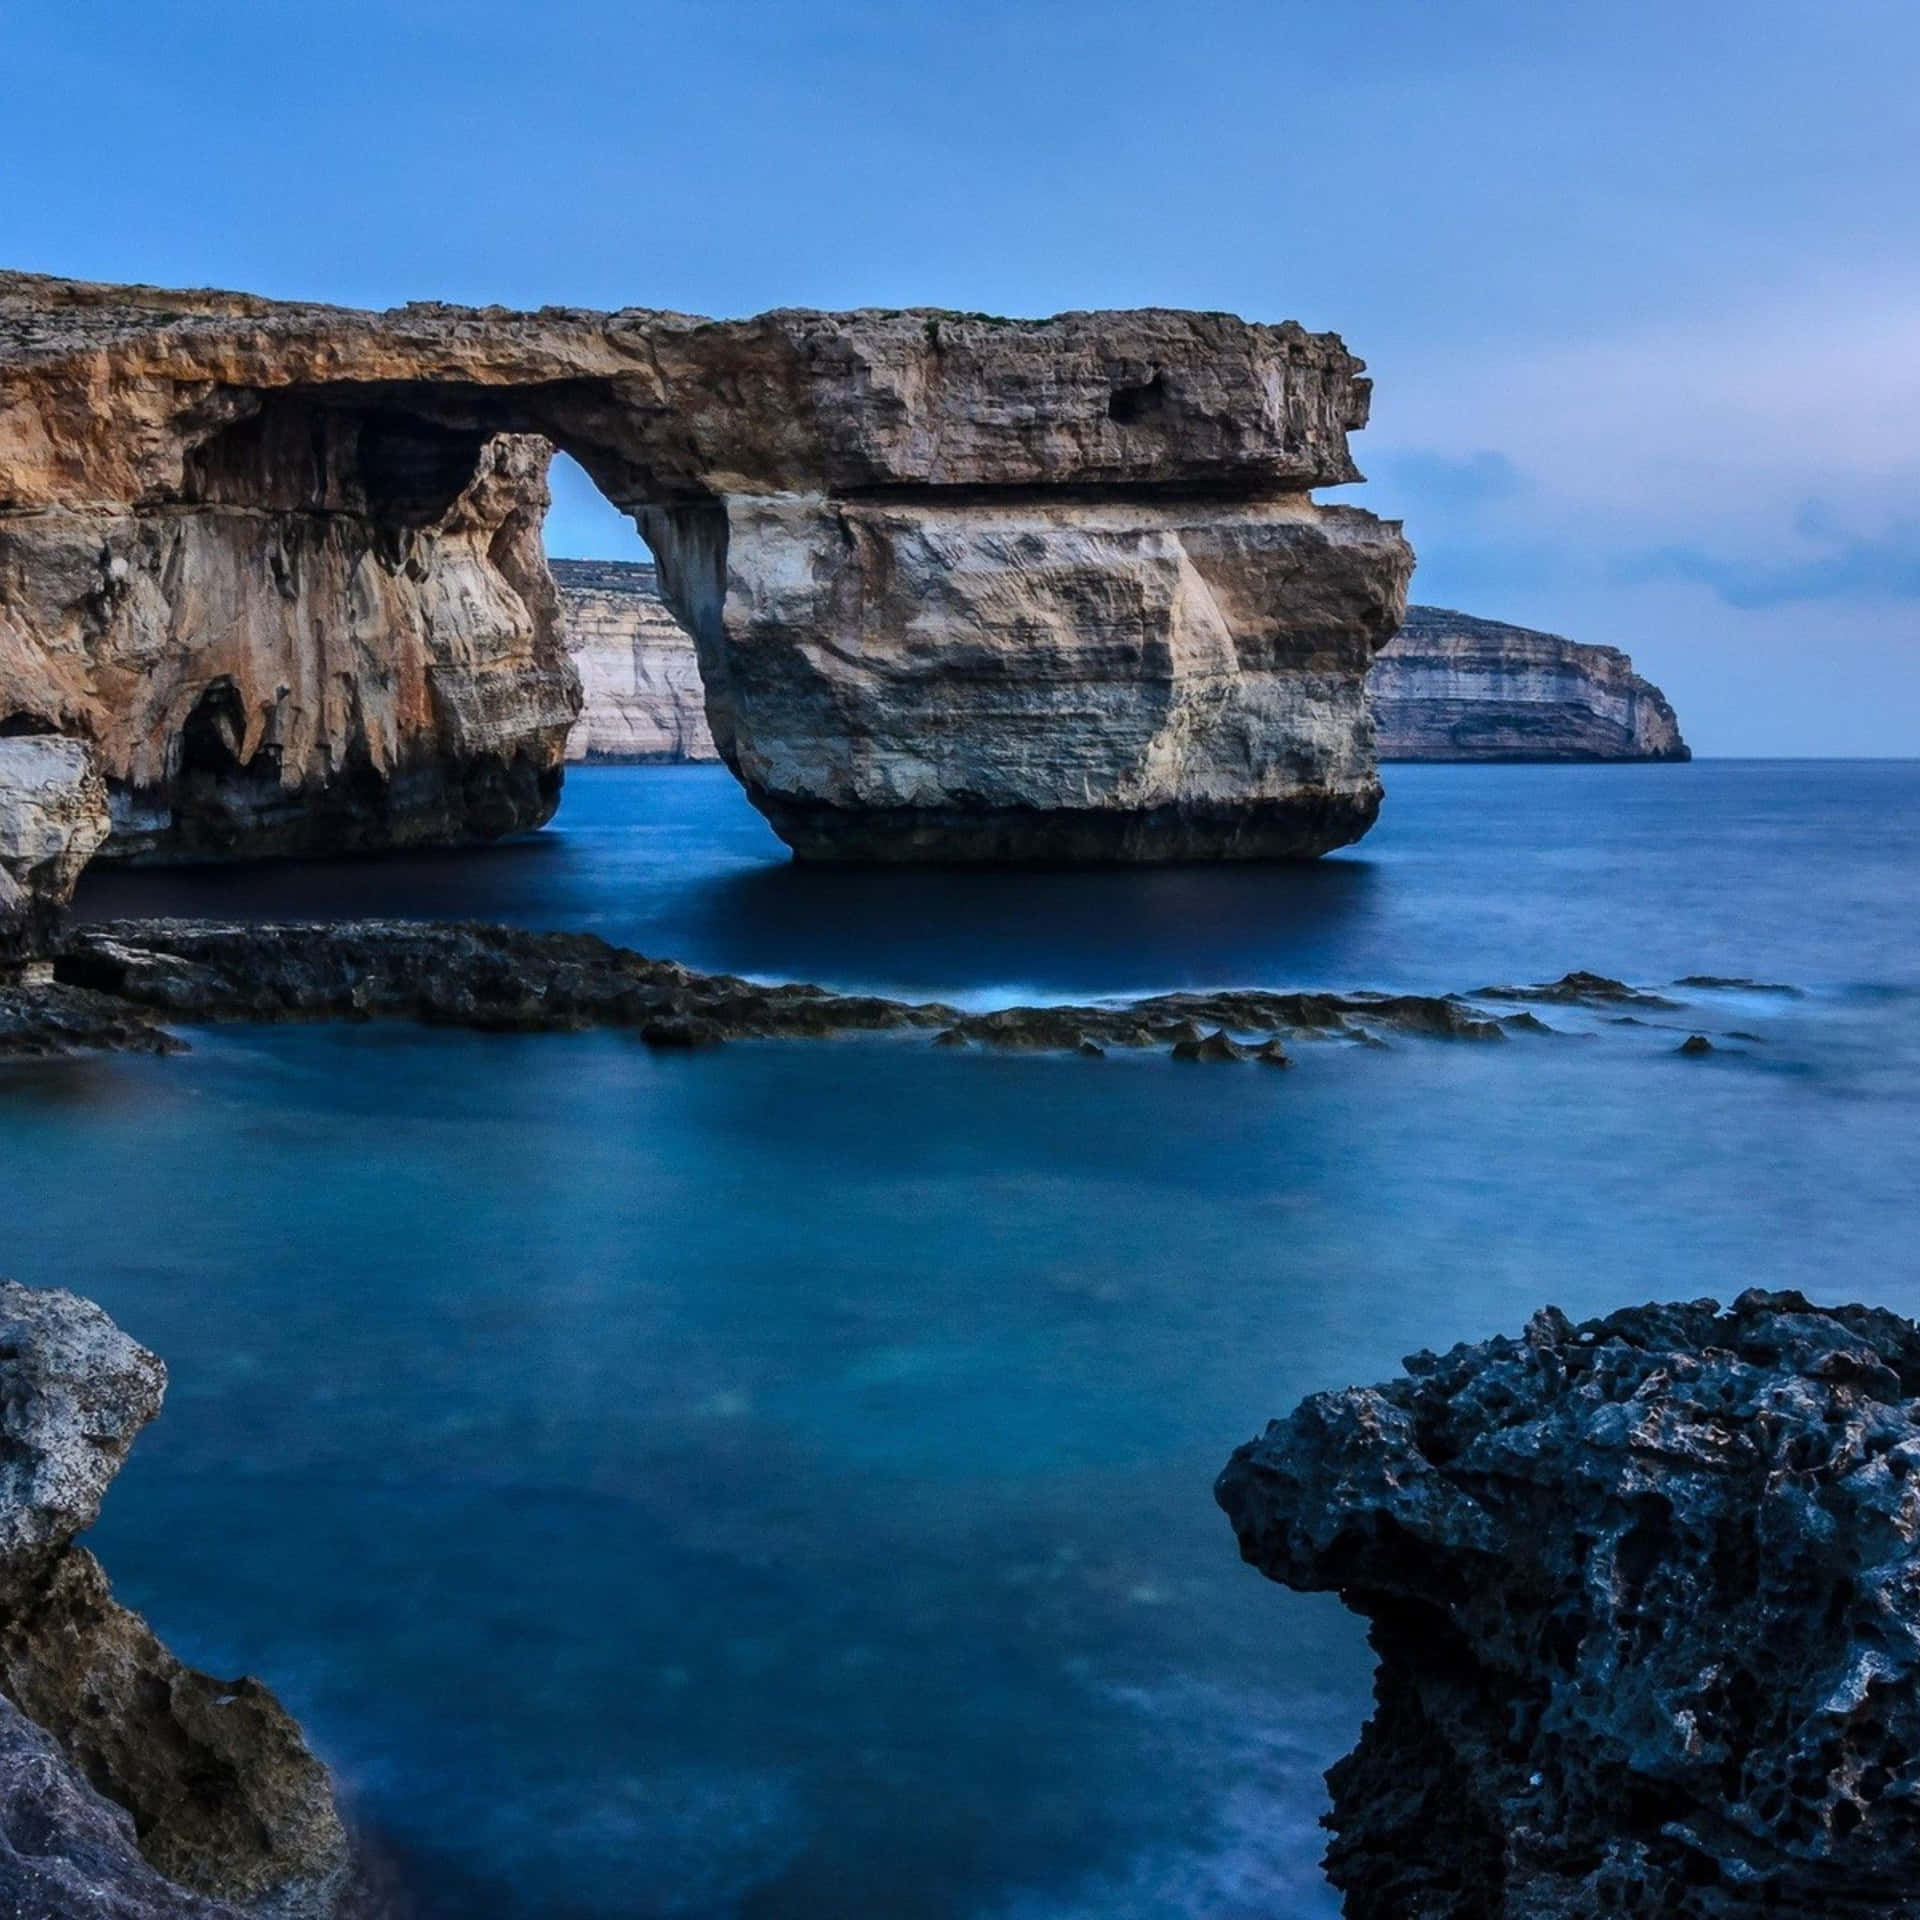 Impresionantepaisaje De La Costa De Malta